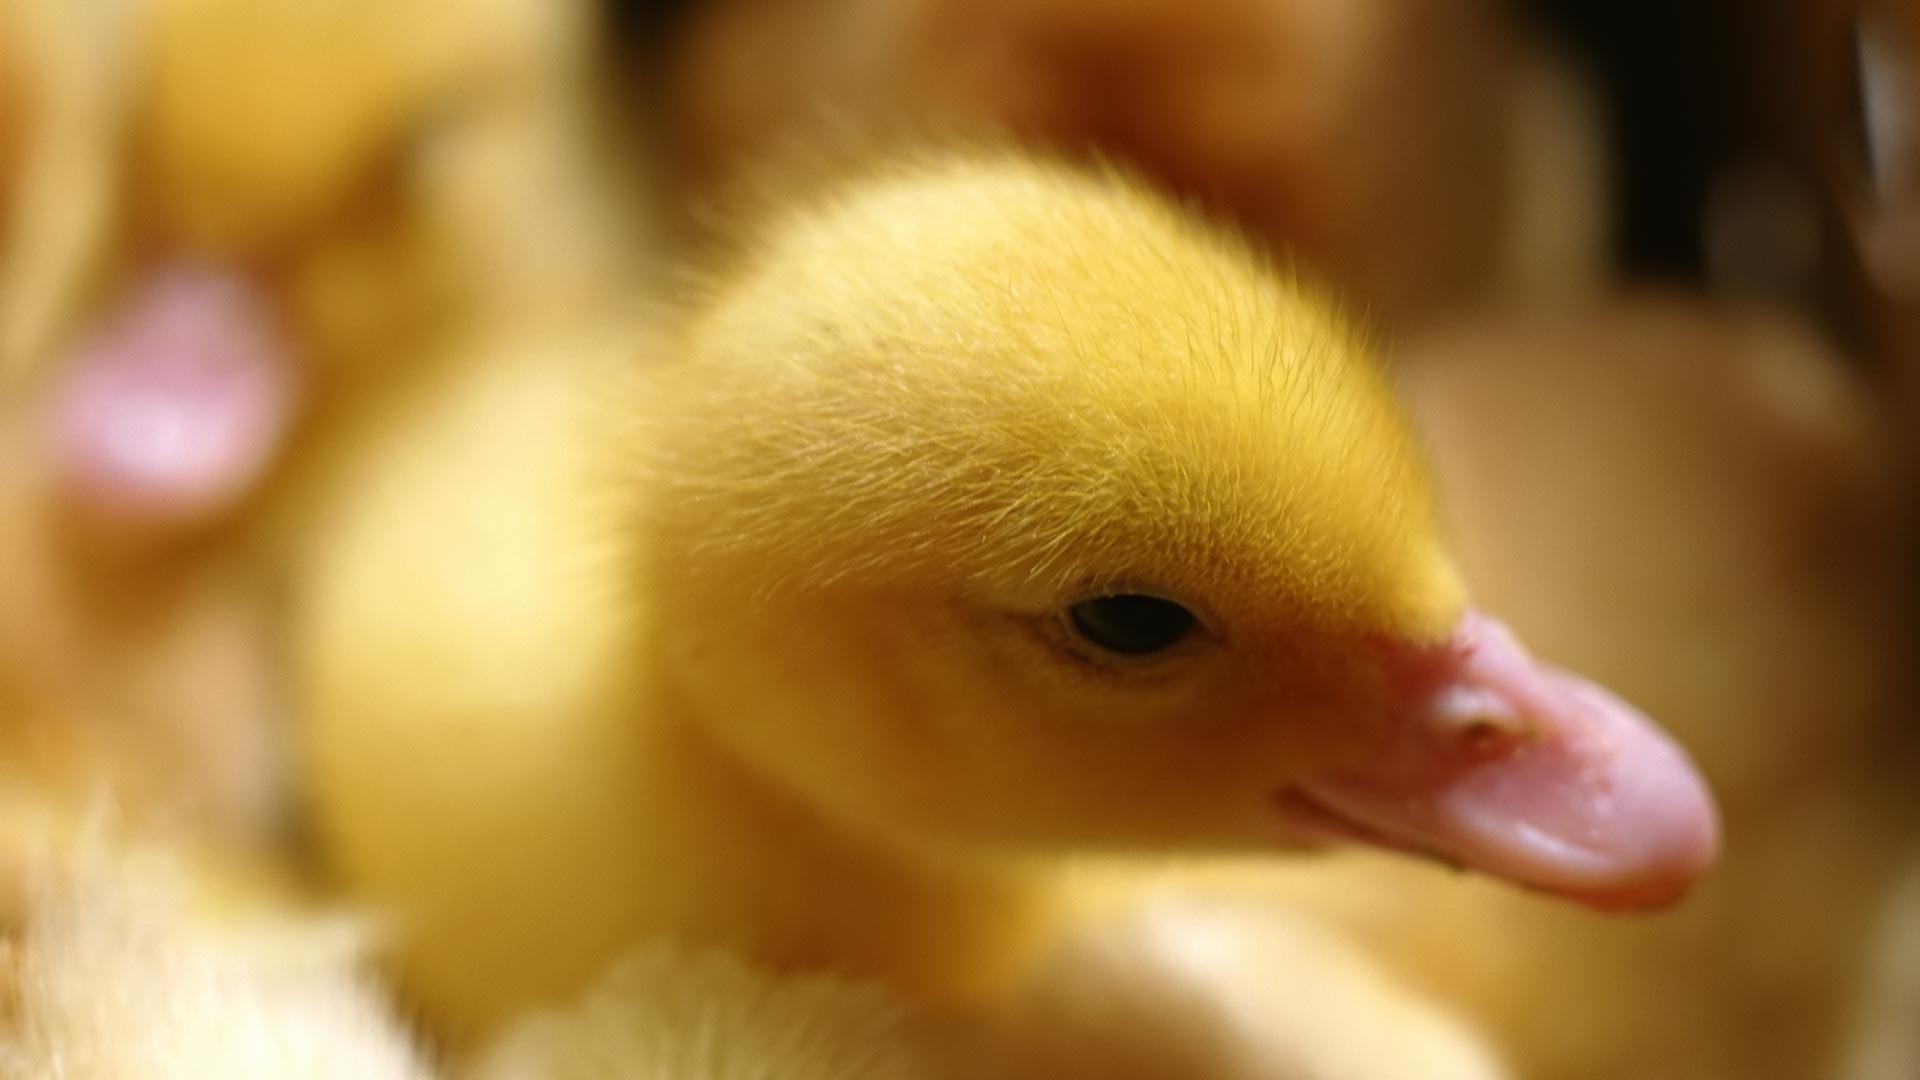 Wallpapers Backgrounds – Desktop backgrounds Animal Life Animals Cute baby duckling